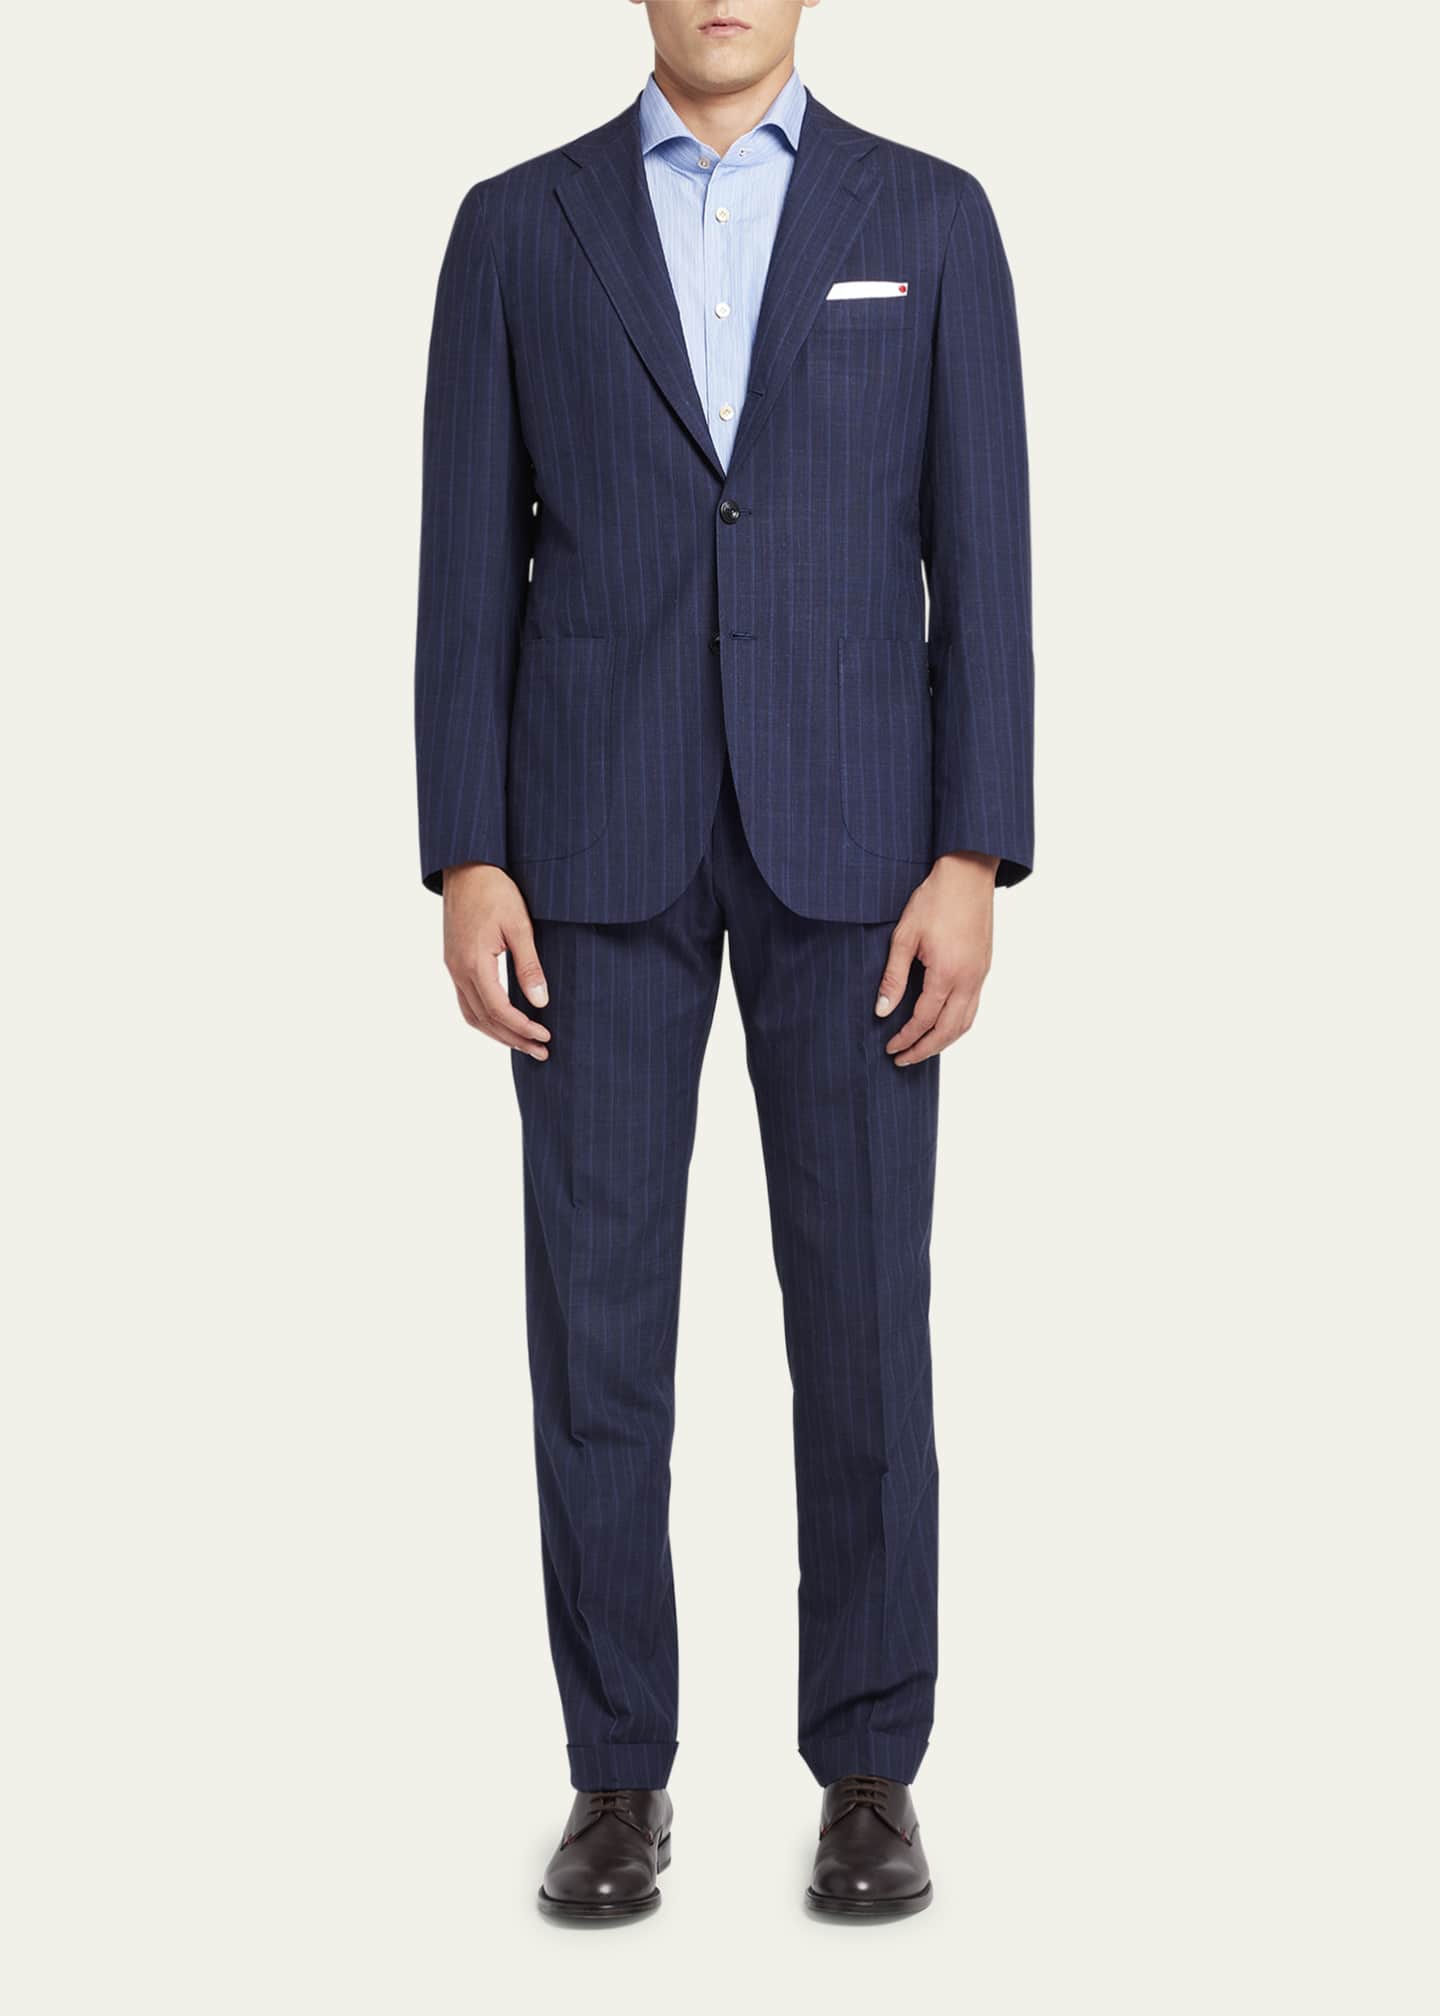 Kiton Men's Shadow Stripe Suit - Bergdorf Goodman